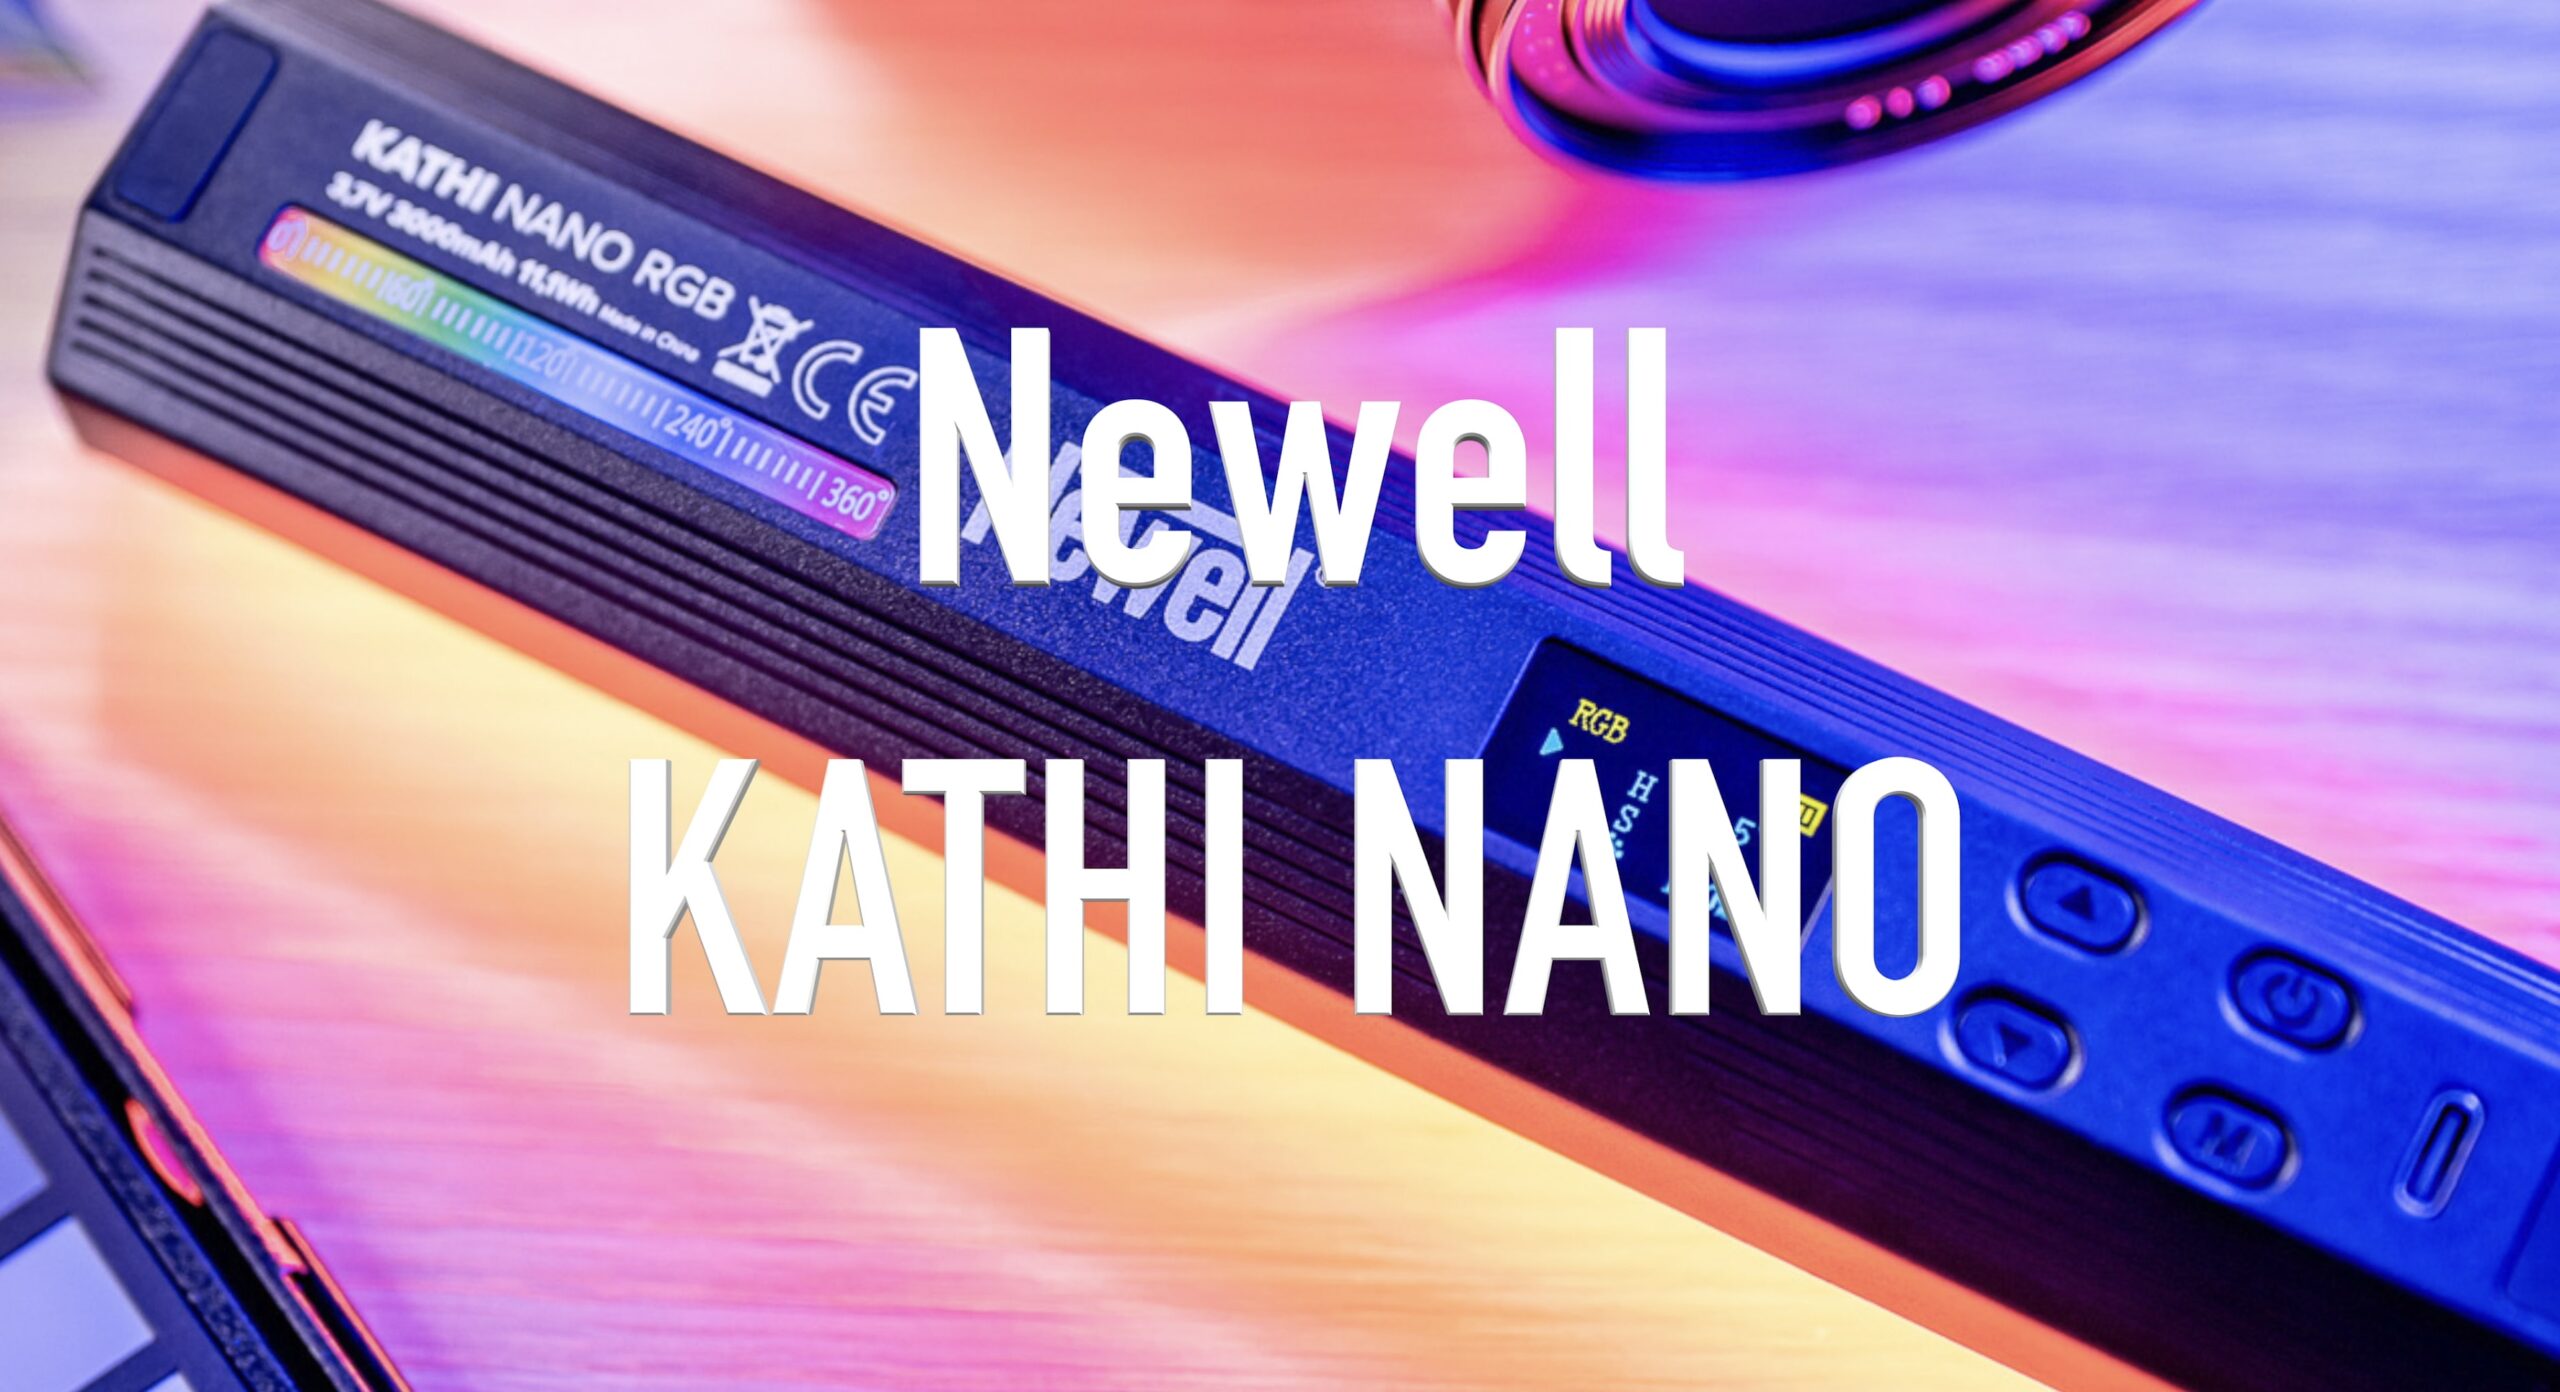 Newell Kathi Nano